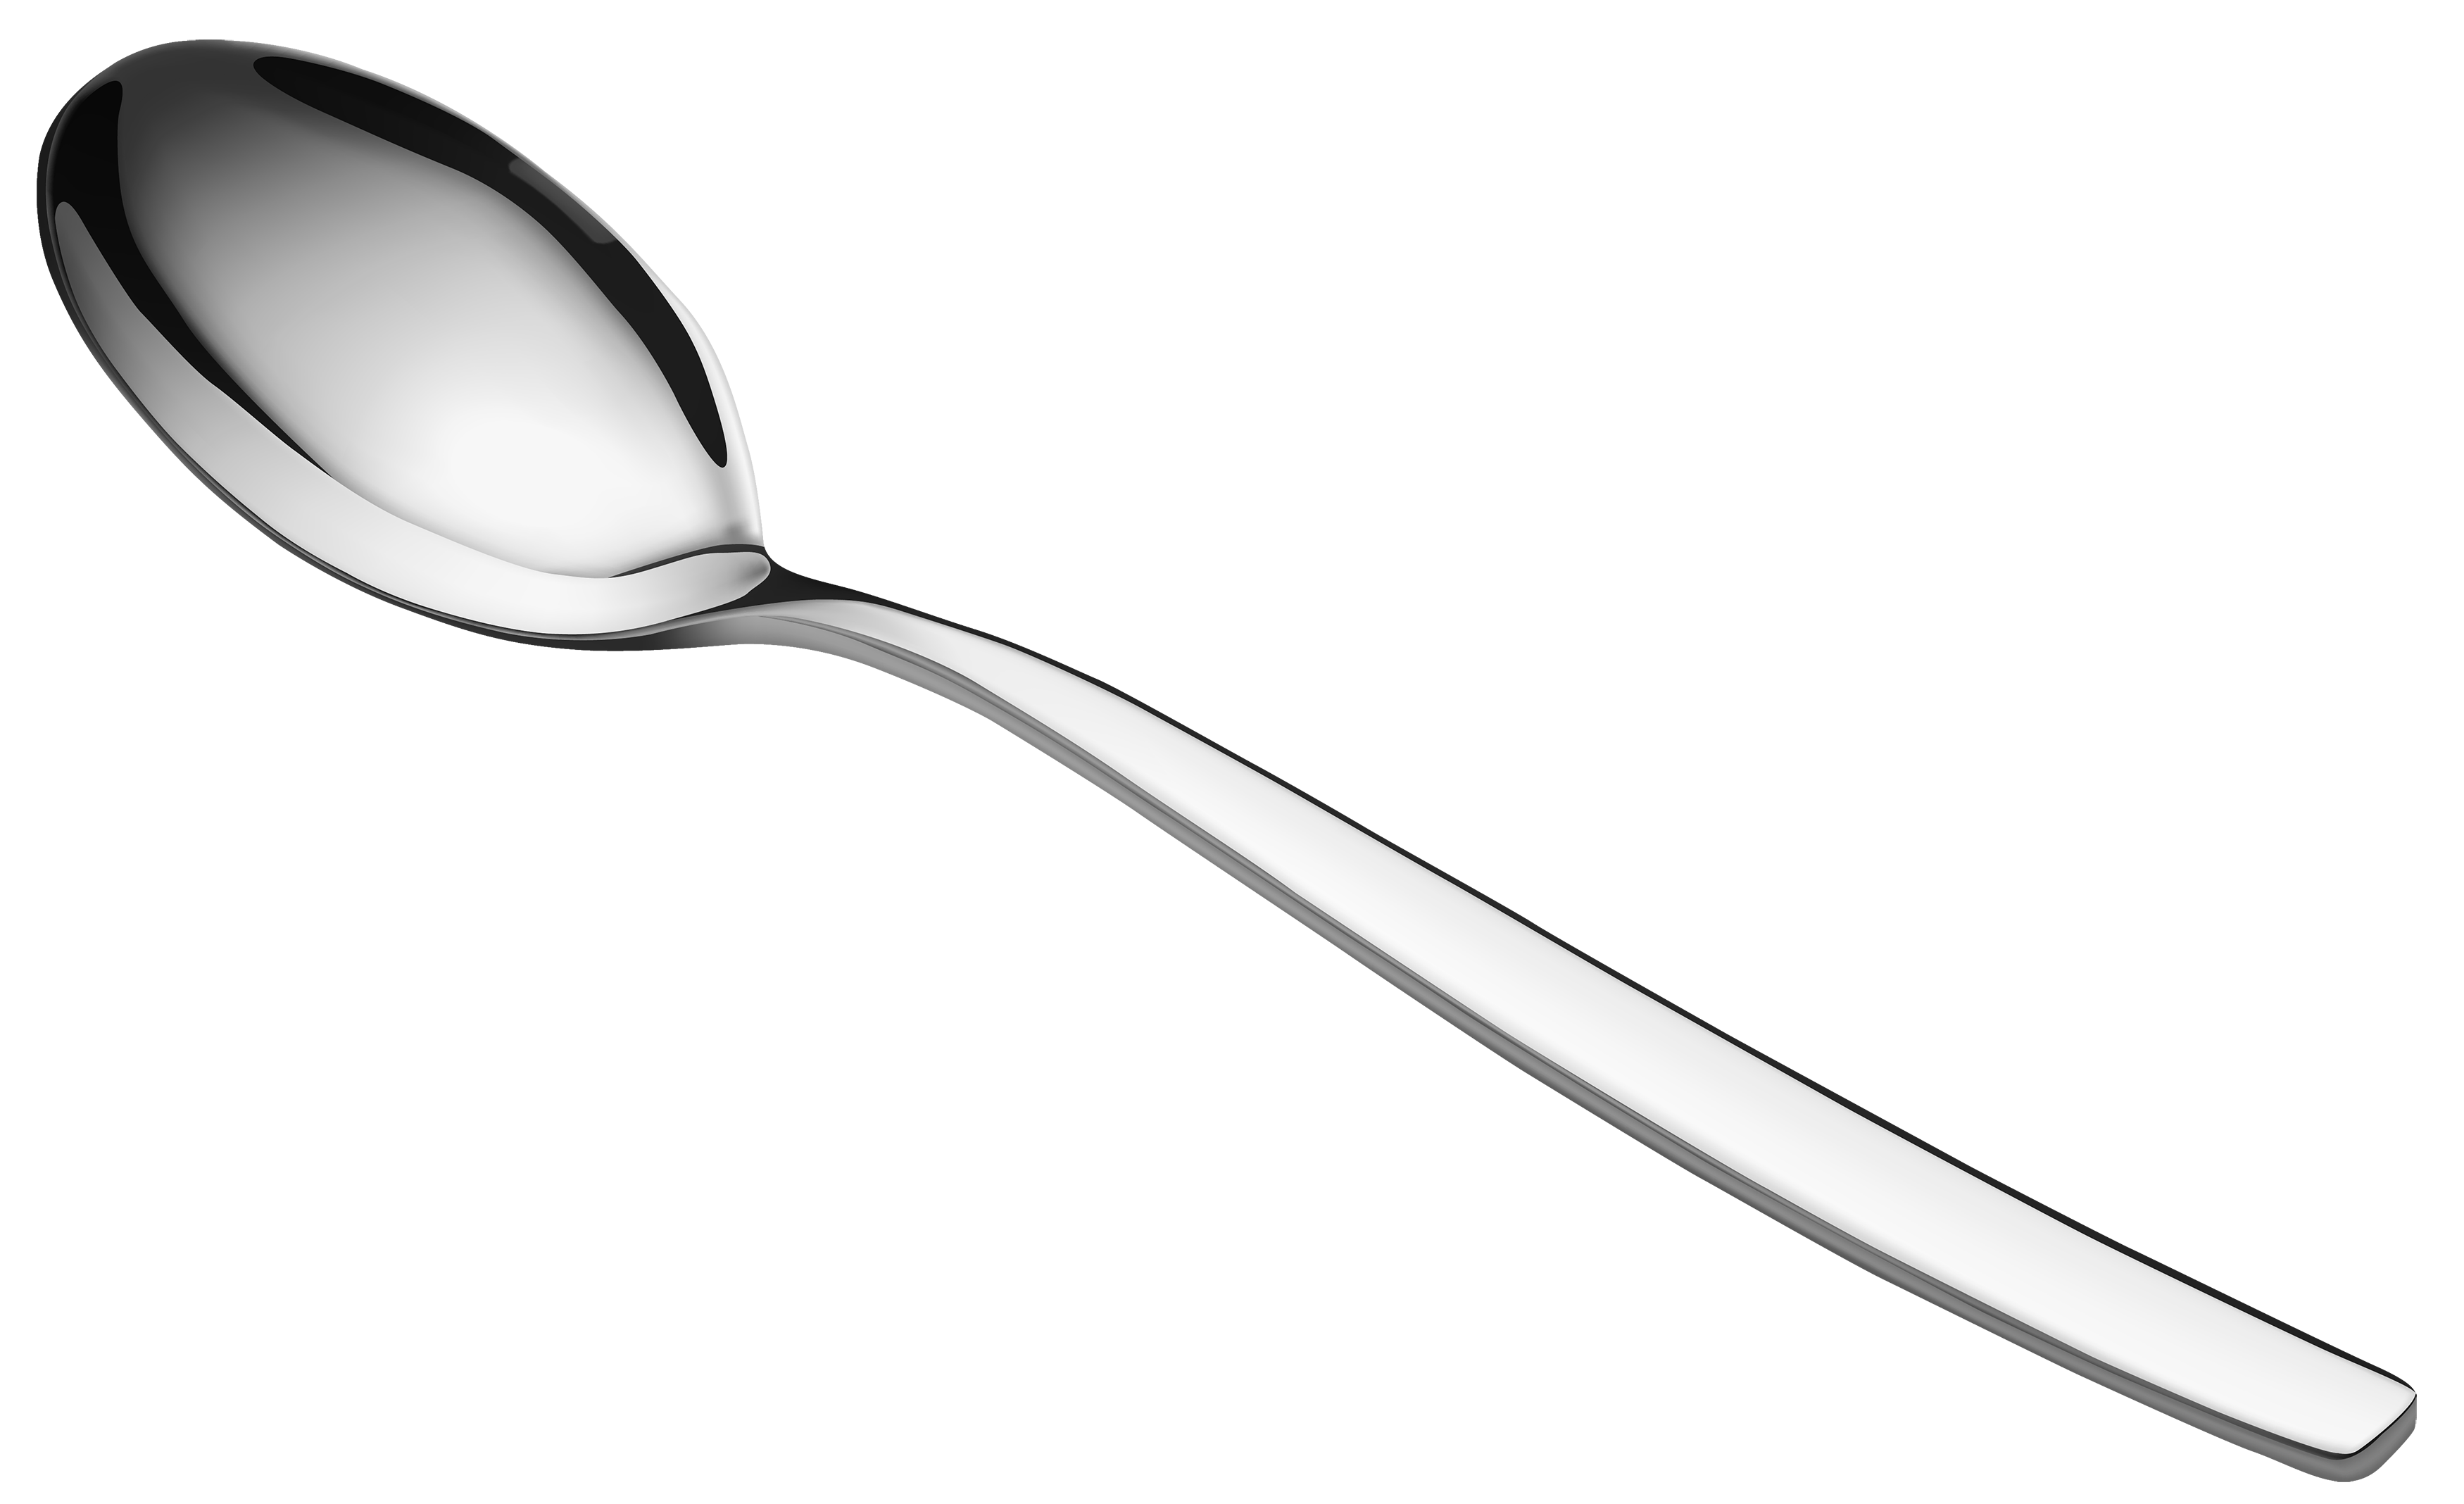 Spoon #18